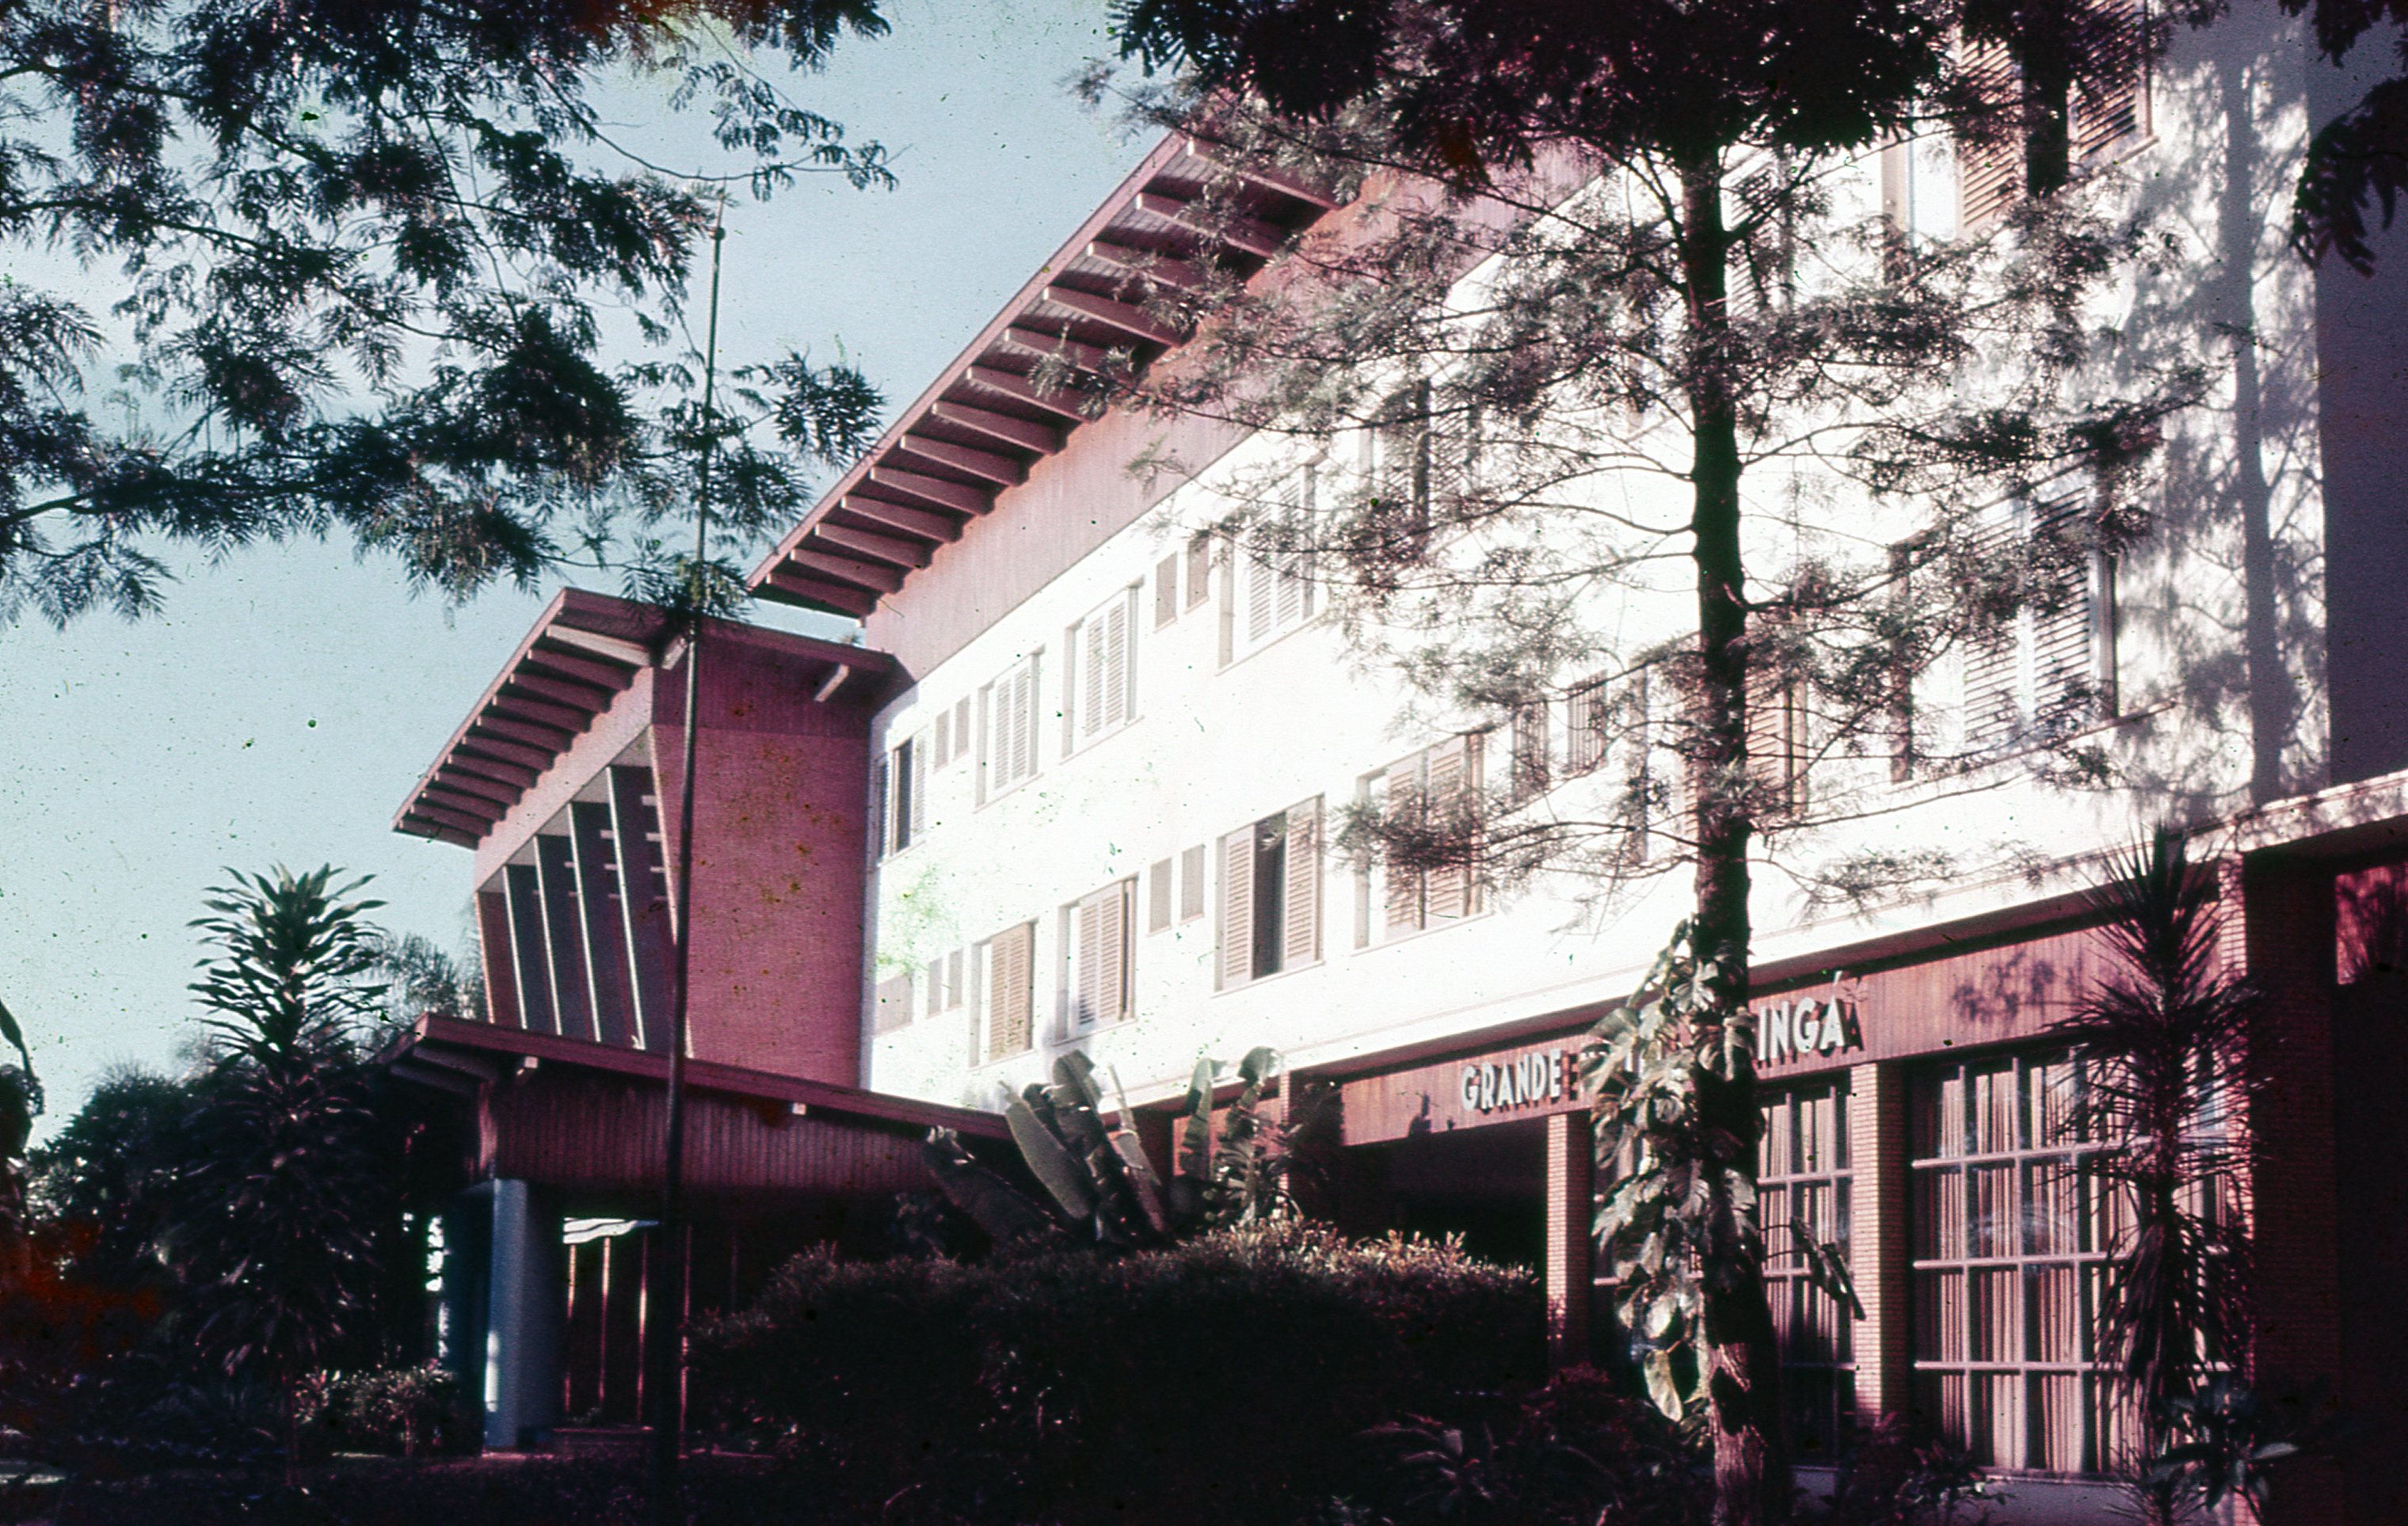 Grande Hotel Maringá - Anos 1960